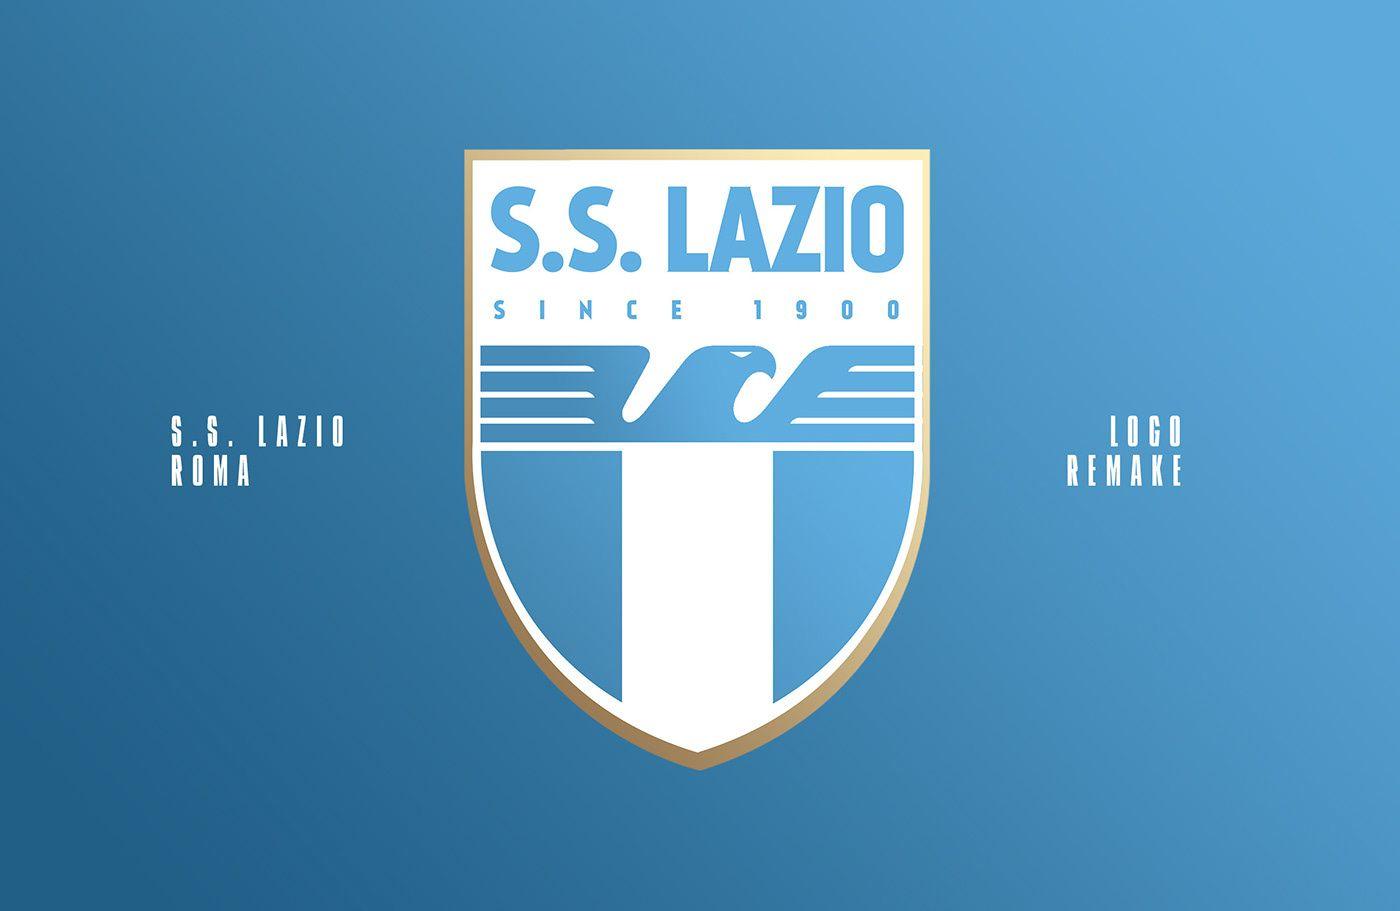 Lazio Logo - S.S. Lazio - LOGO REMAKE on Behance